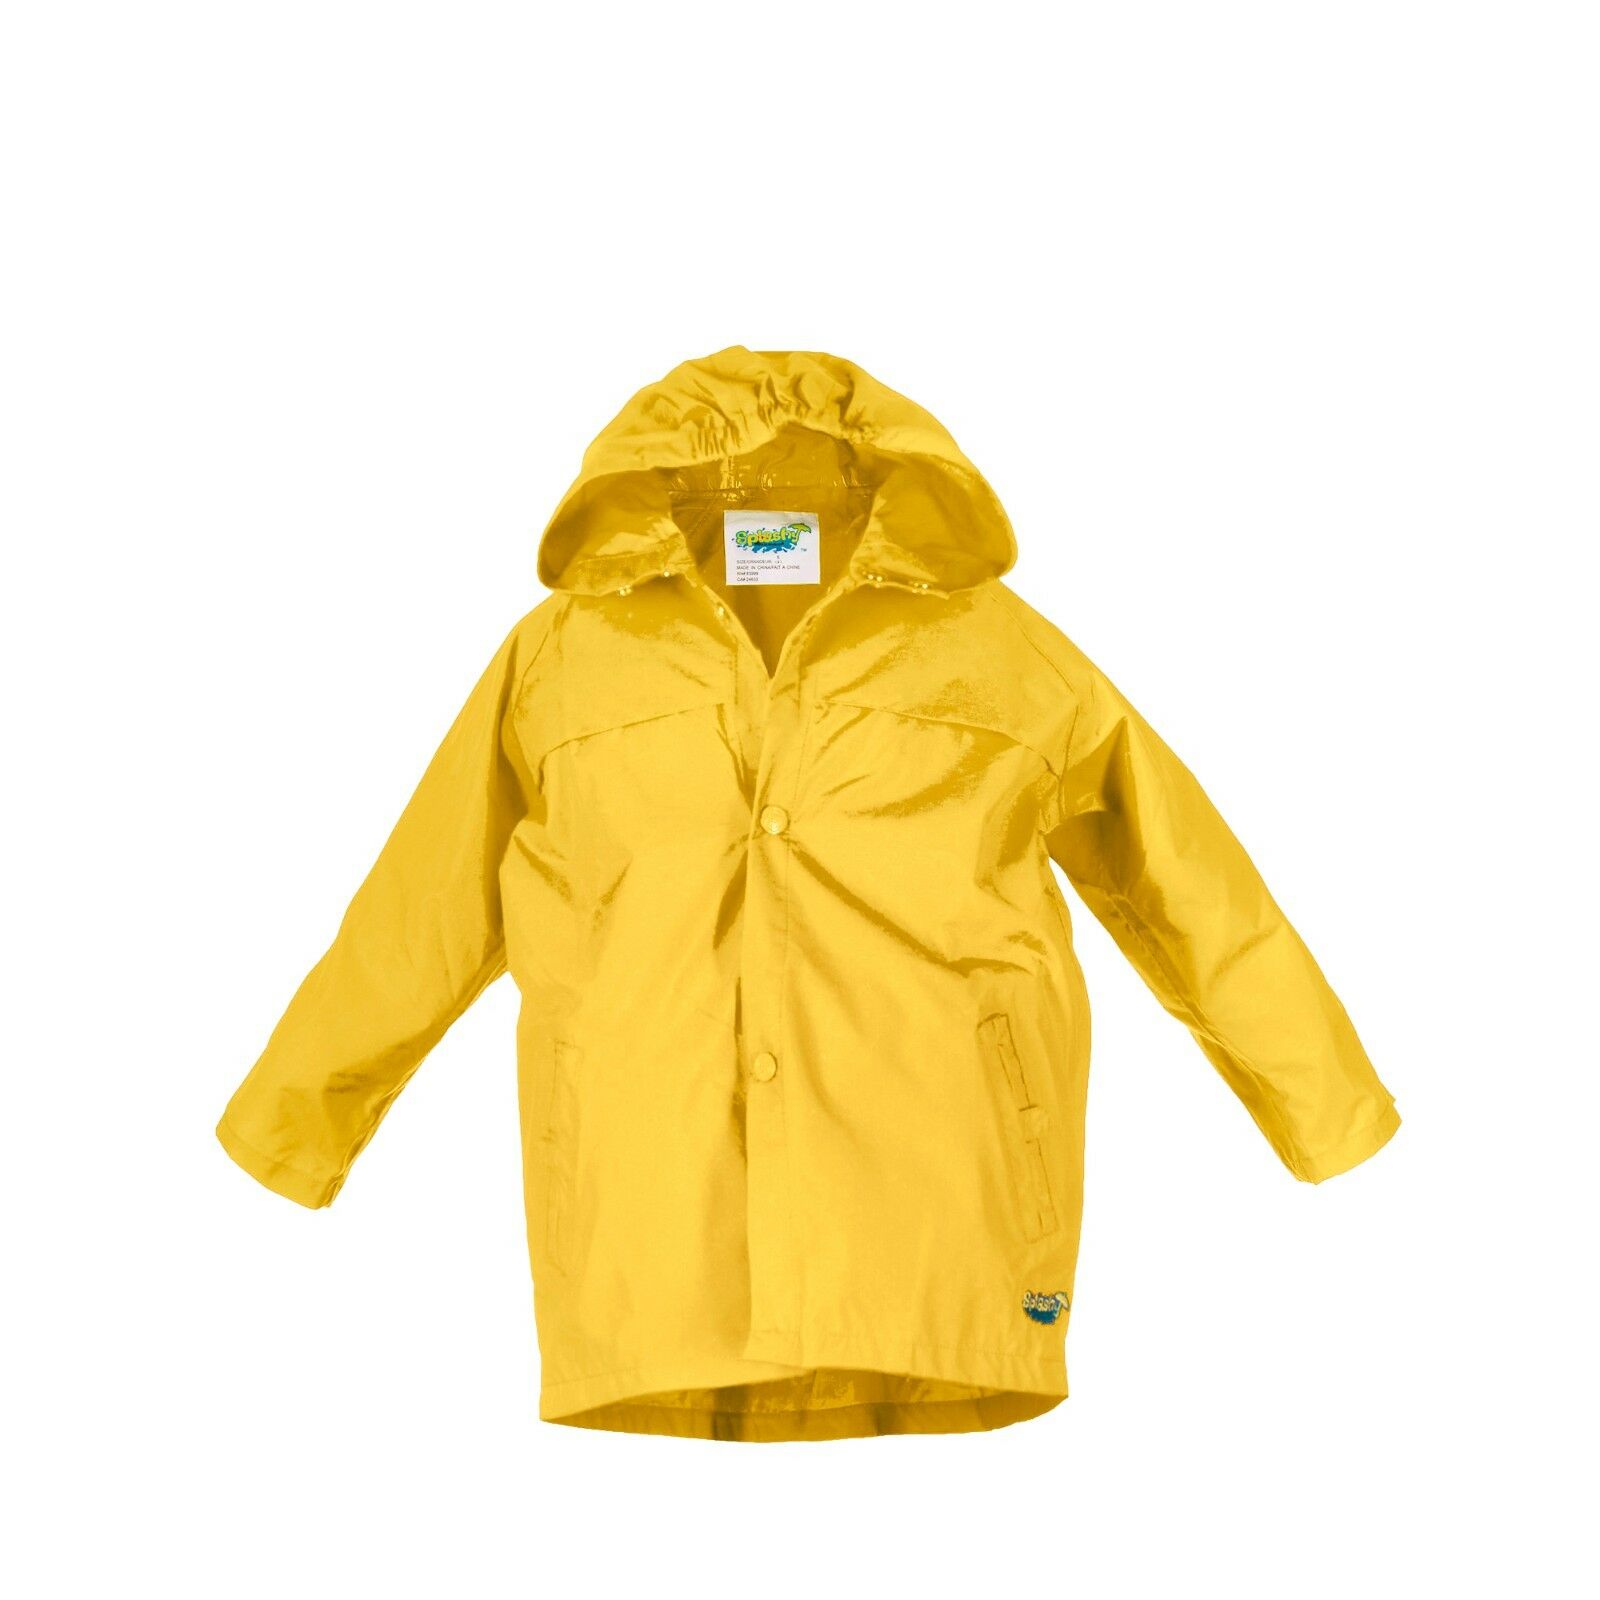 Splashy Nylon Rainwear For Kids - Rain Jacket ~ Bright And Colorful!!